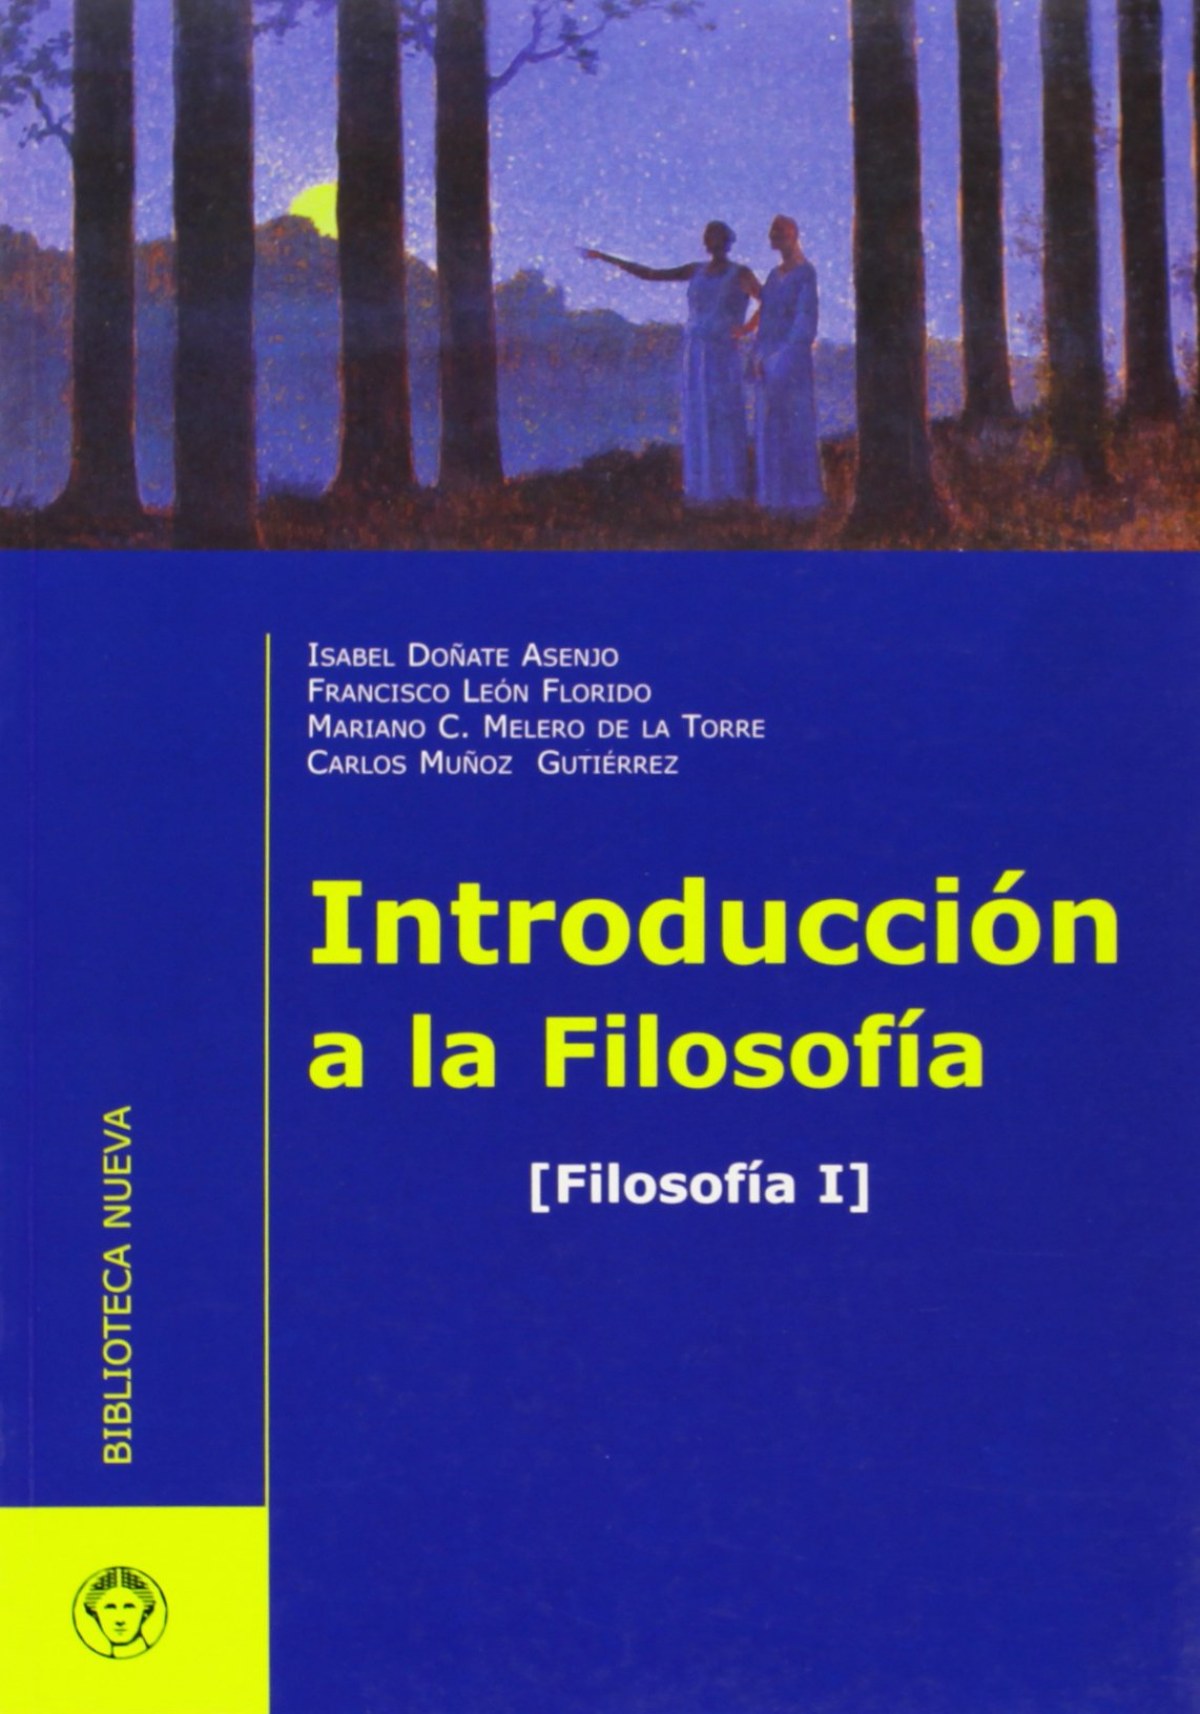 Introduccion a la filosofia, filosofia i - Leon Florido,Francisco